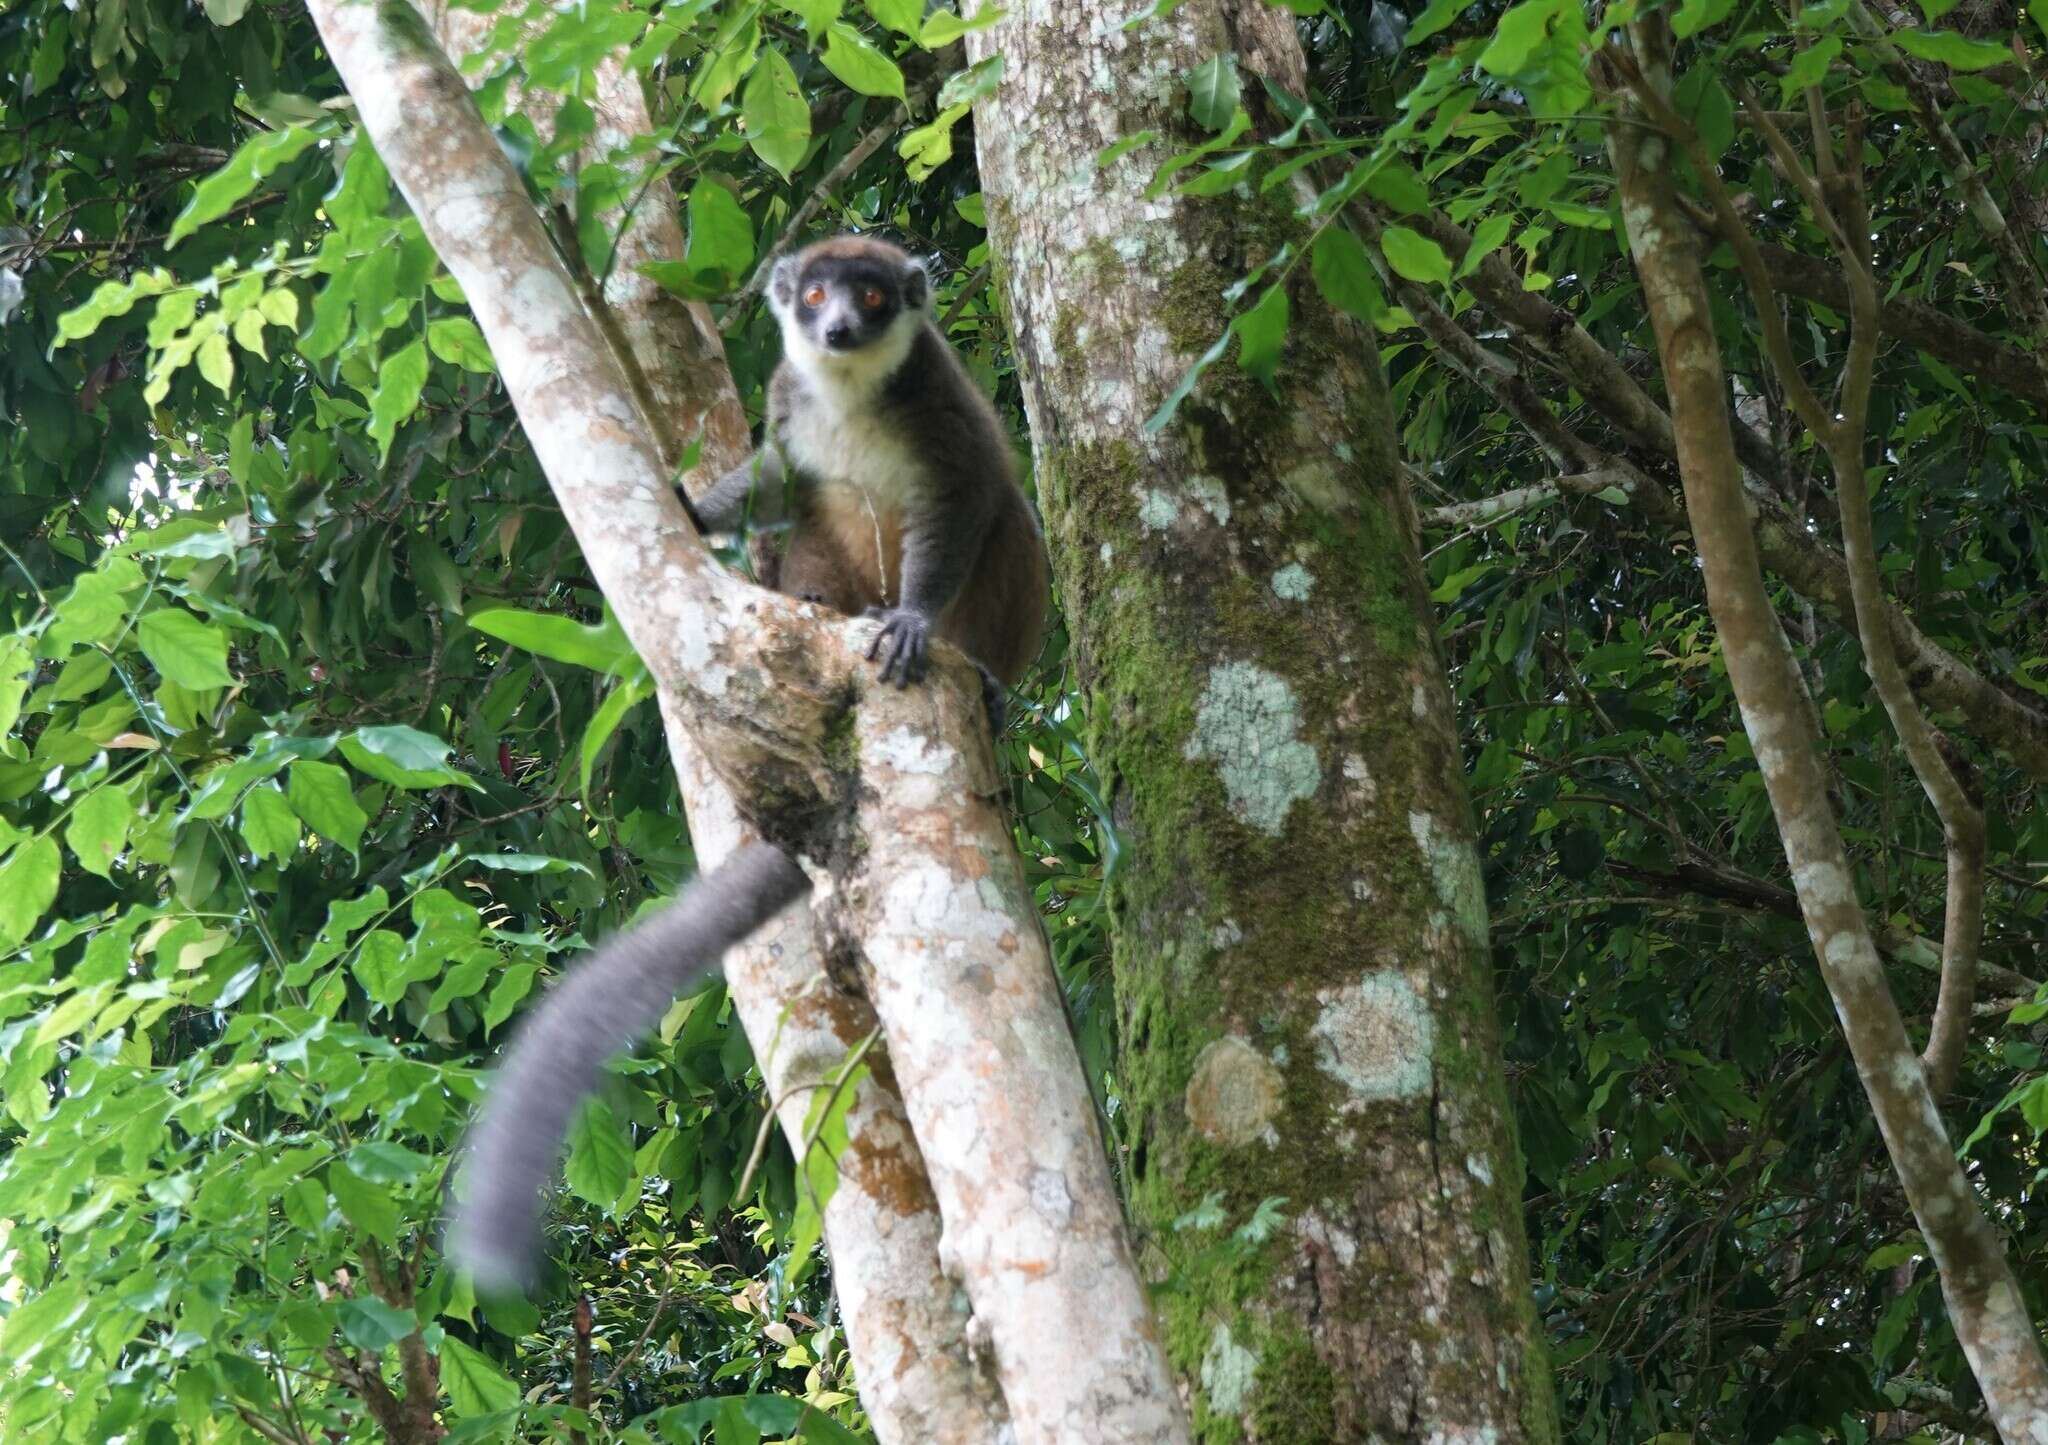 Image of Mongoose Lemur